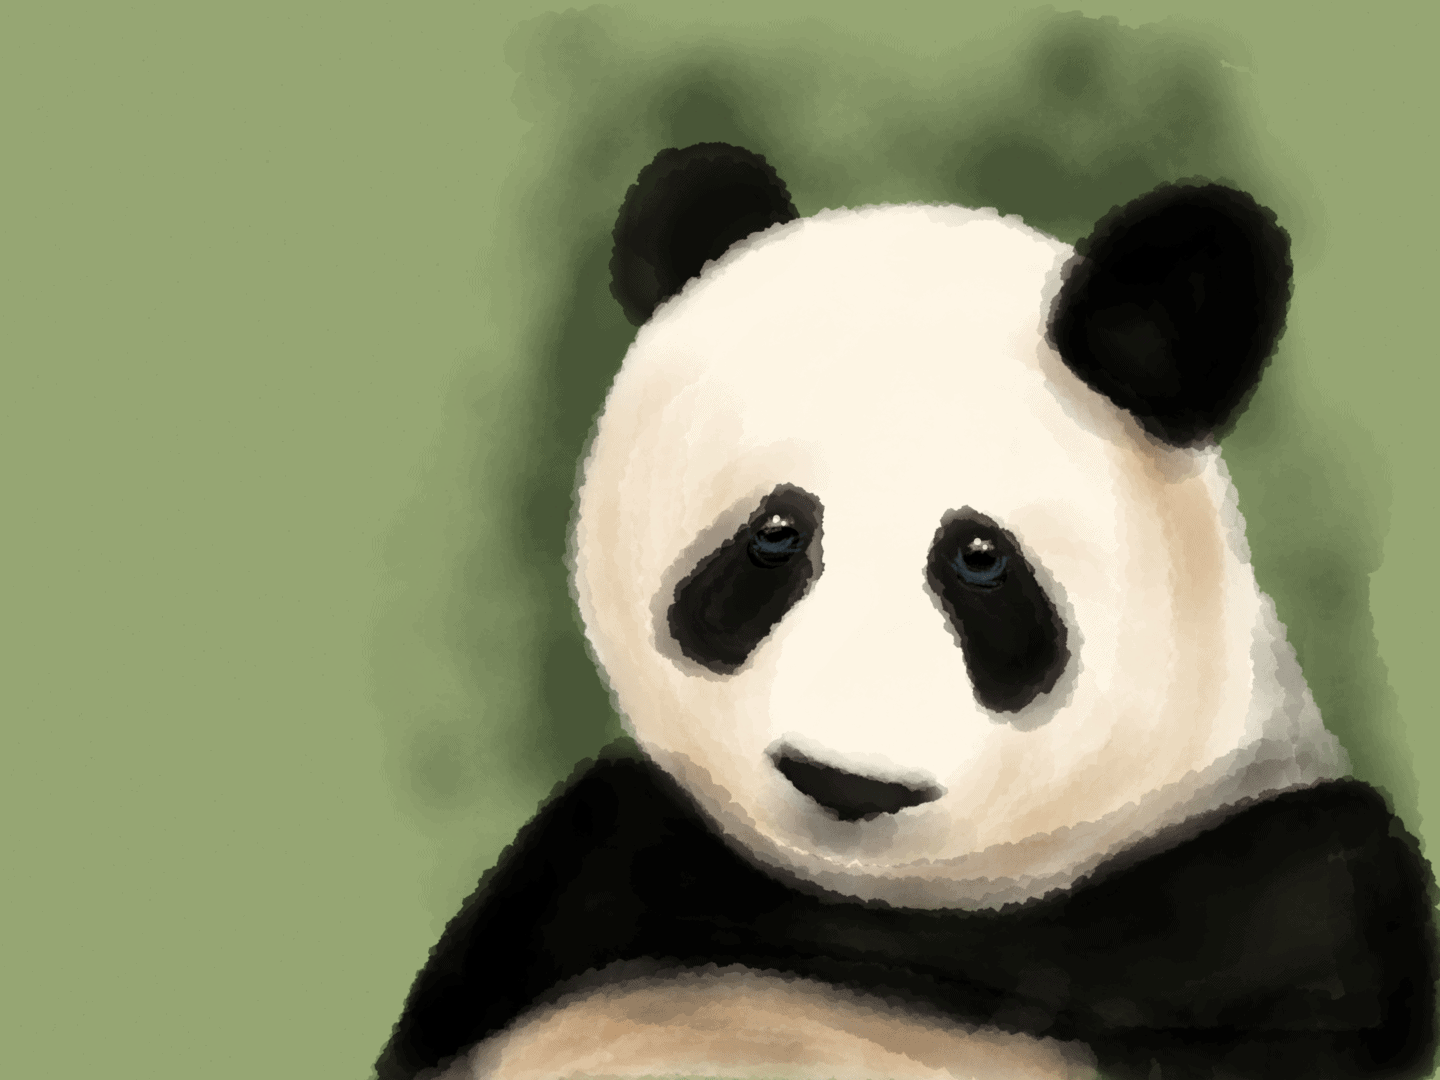 Sad Panda 003 Image